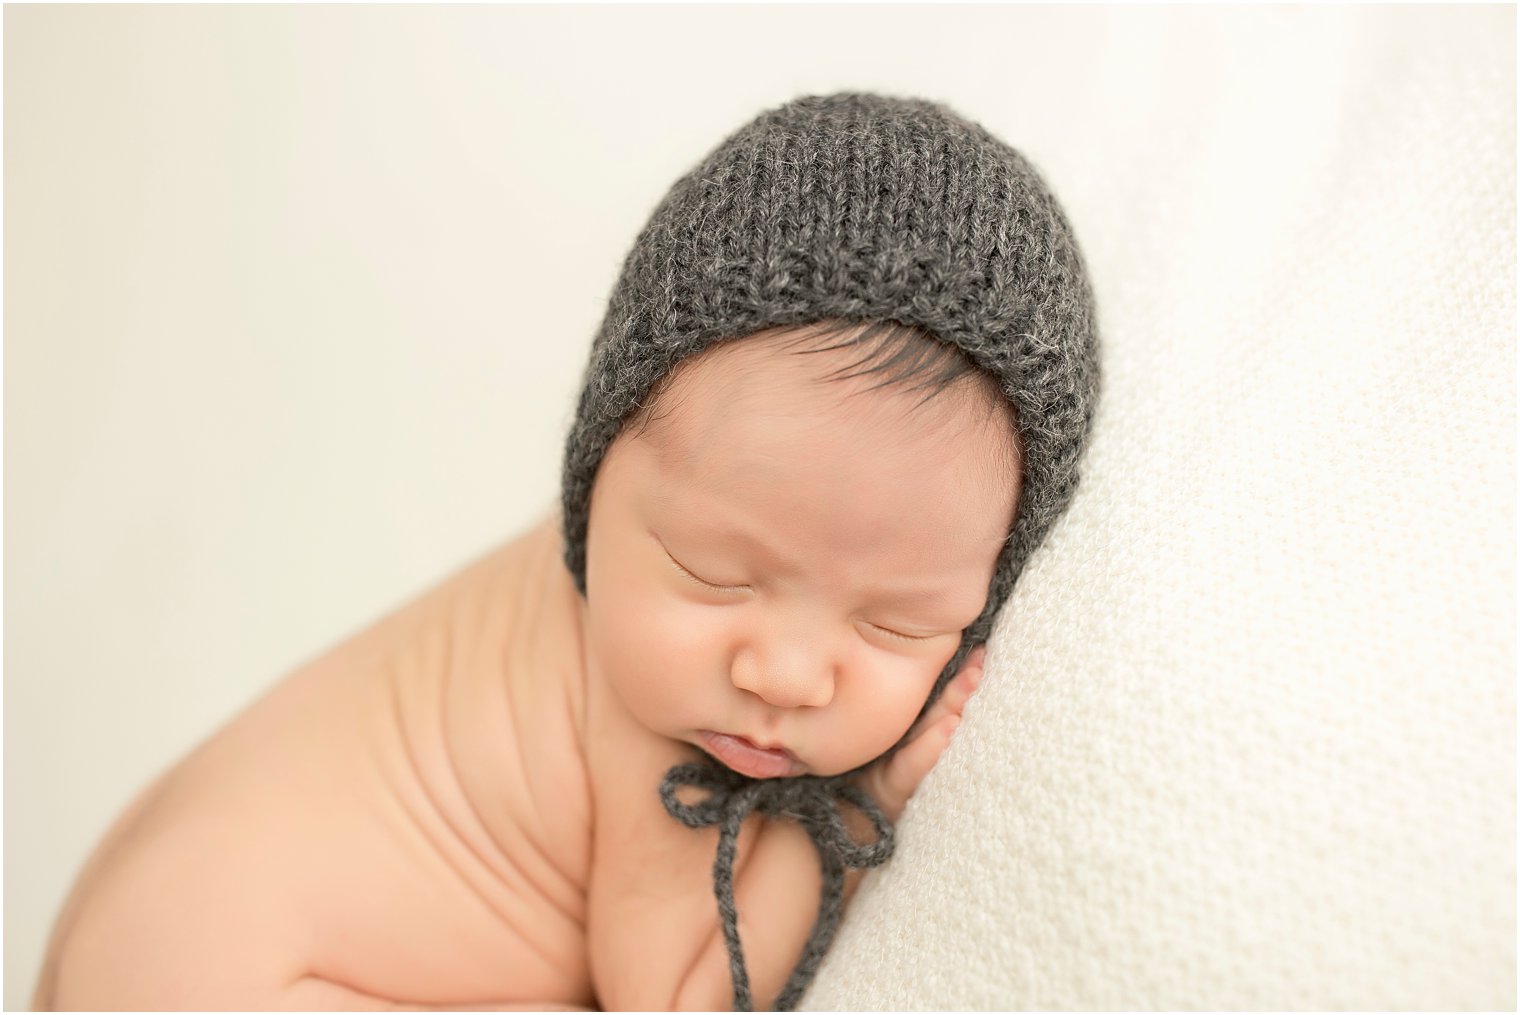 Newborn boy with gray hat